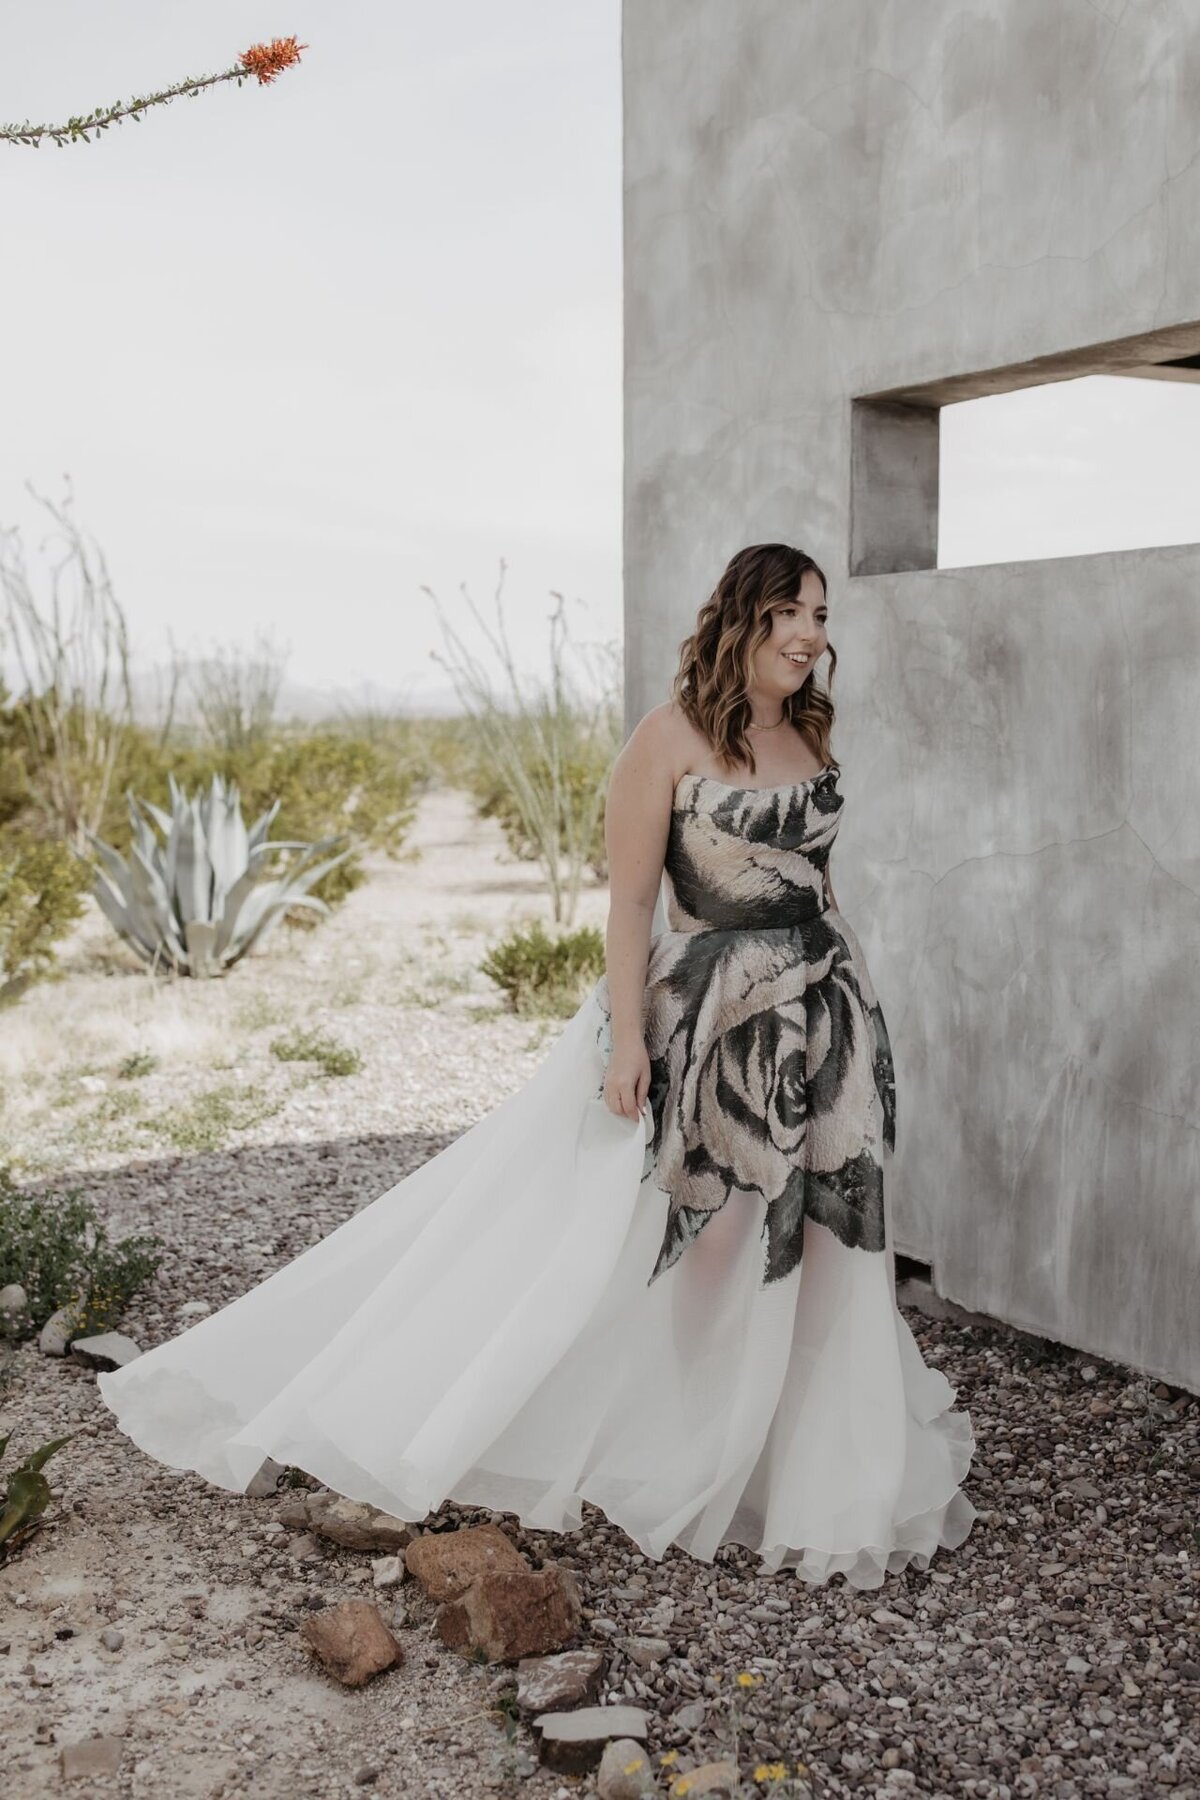 Maia-Stephen-Elaine Events-Austin TX Wedding Planner-32